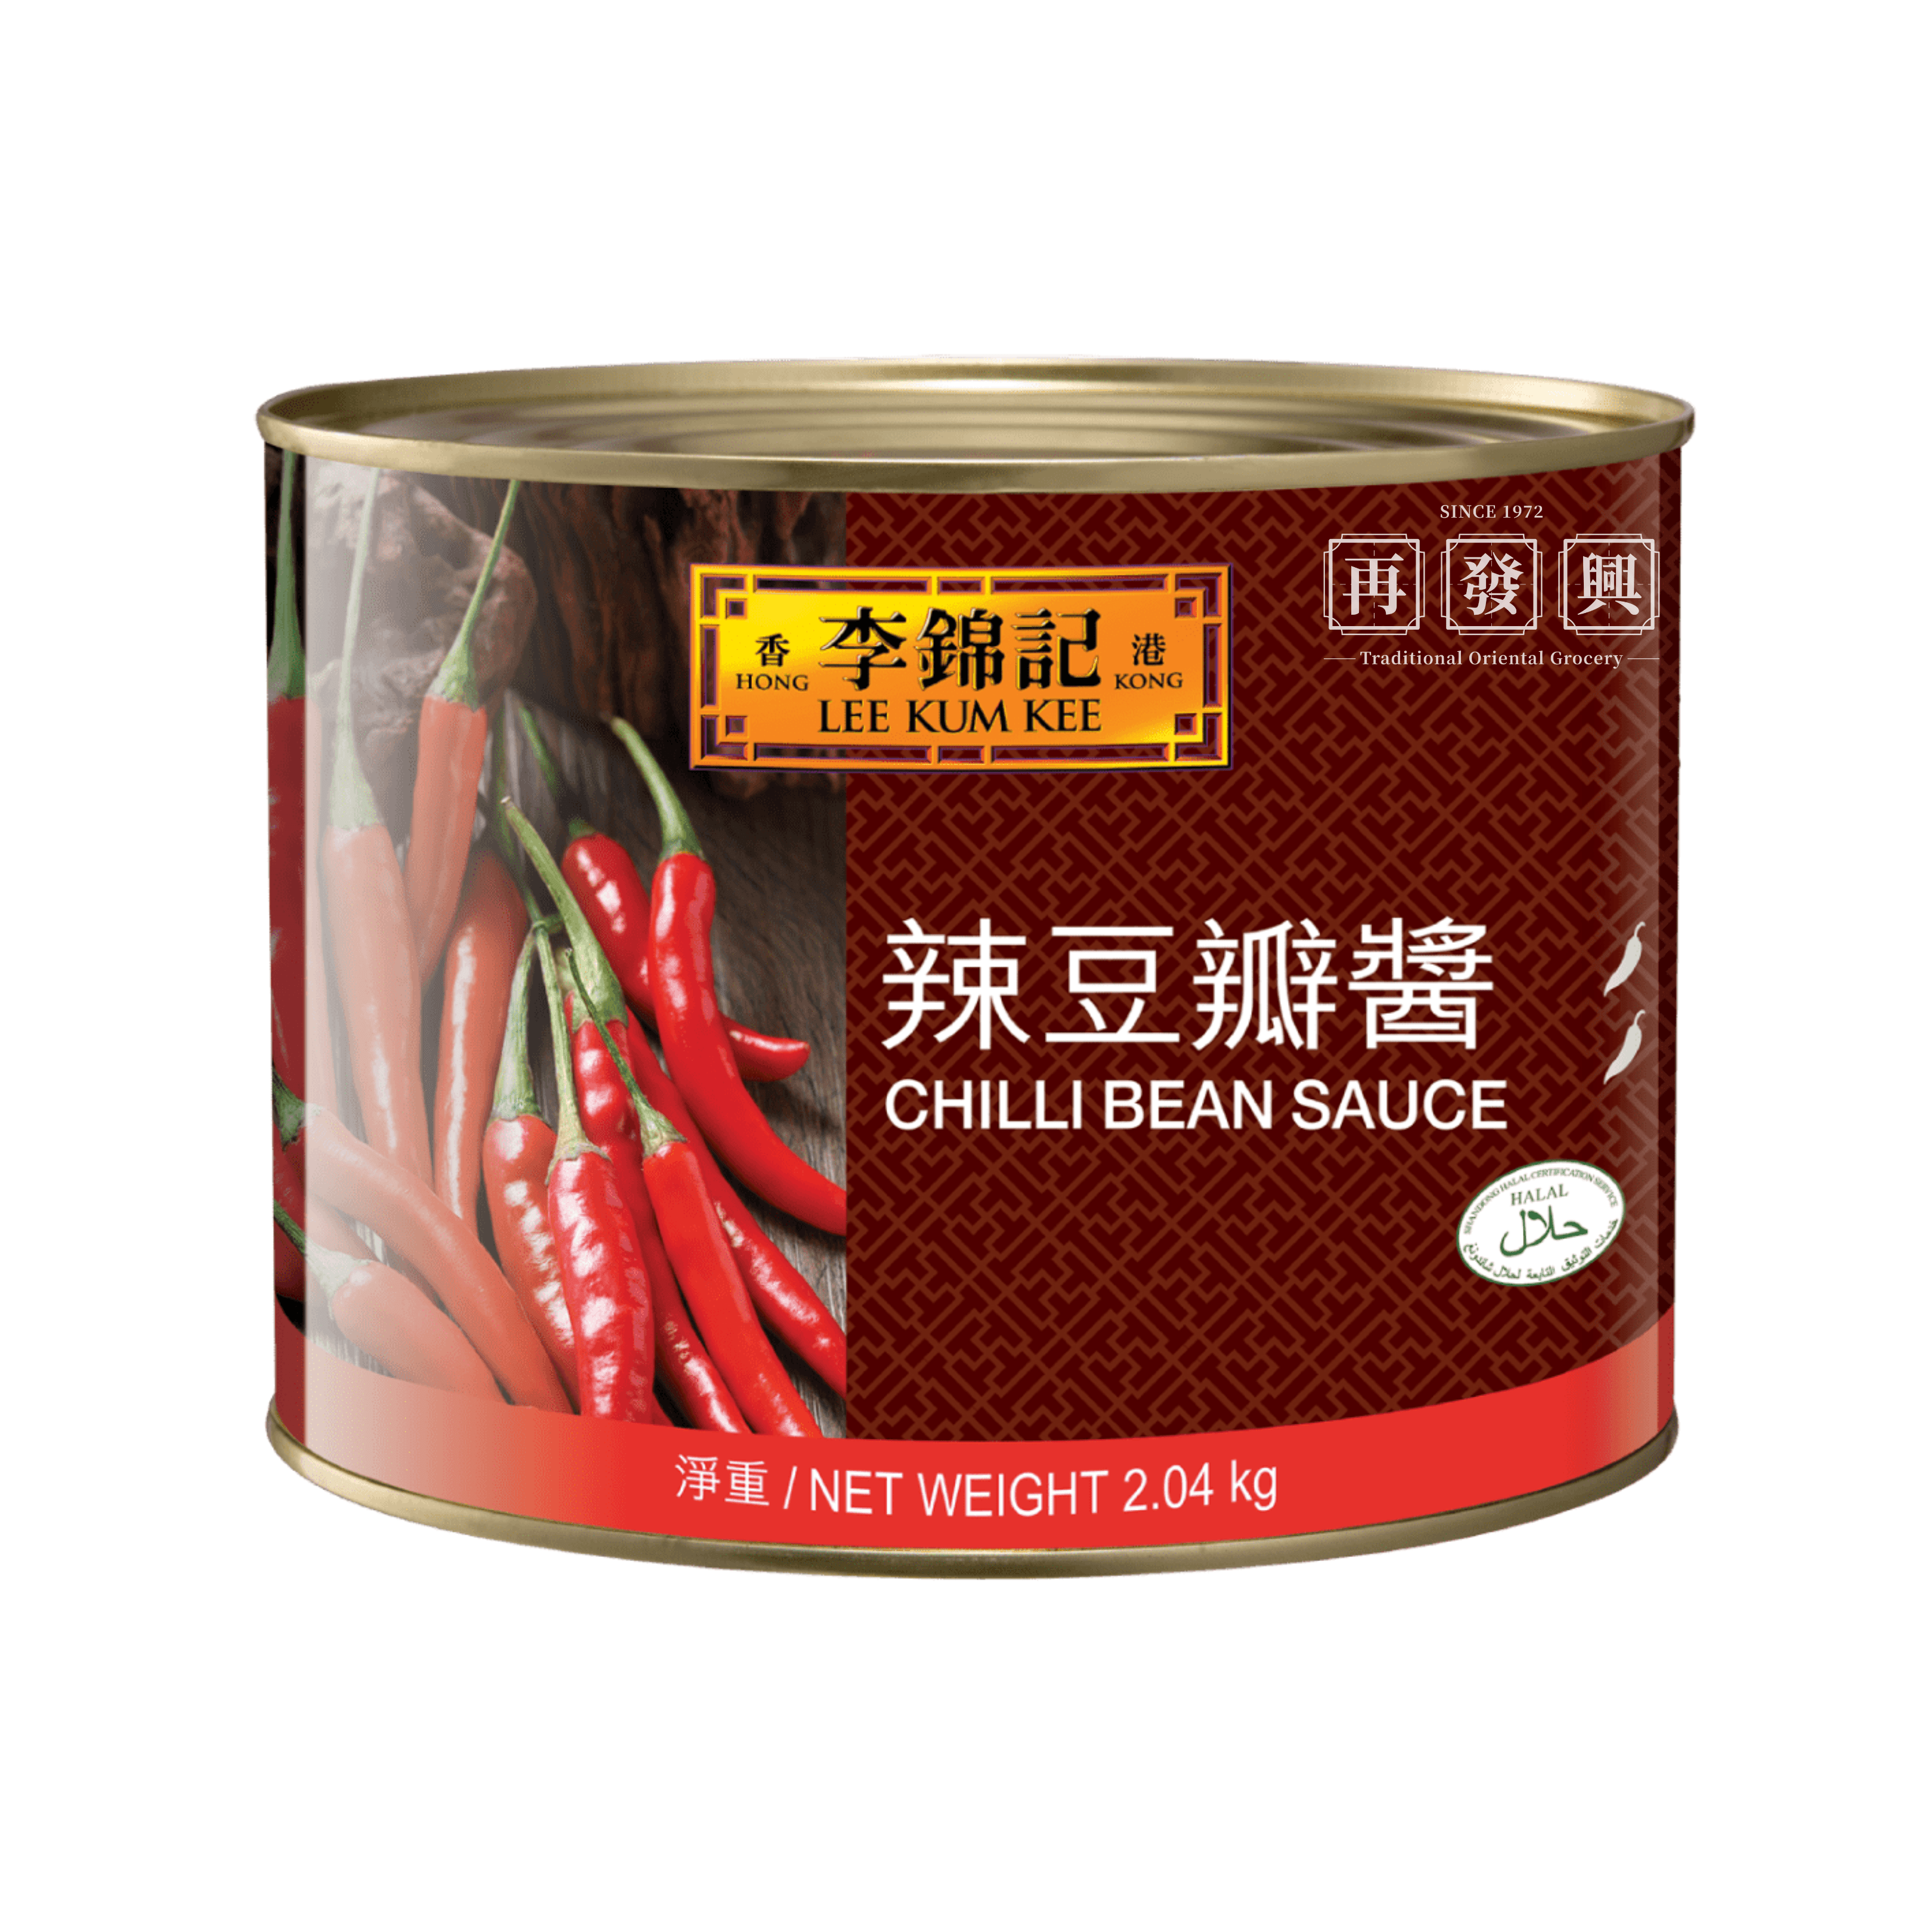 LKK Chili Bean Sauce (Douban) 2.04kg